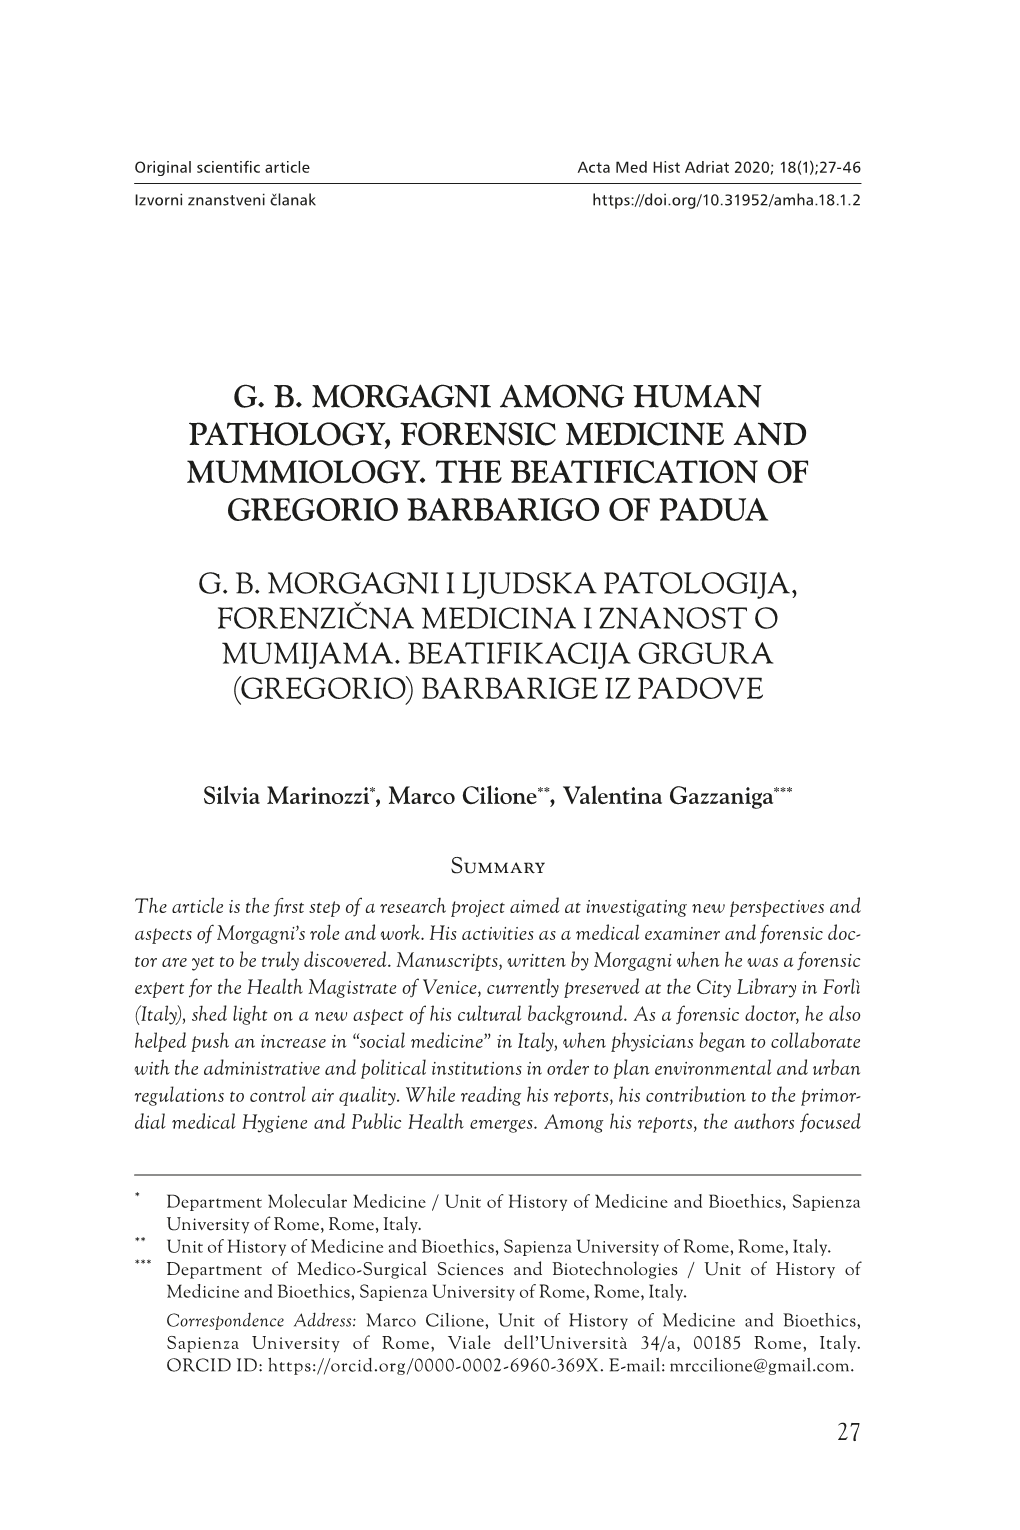 G. B. Morgagni Among Human Pathology, Forensic Medicine and Mummiology